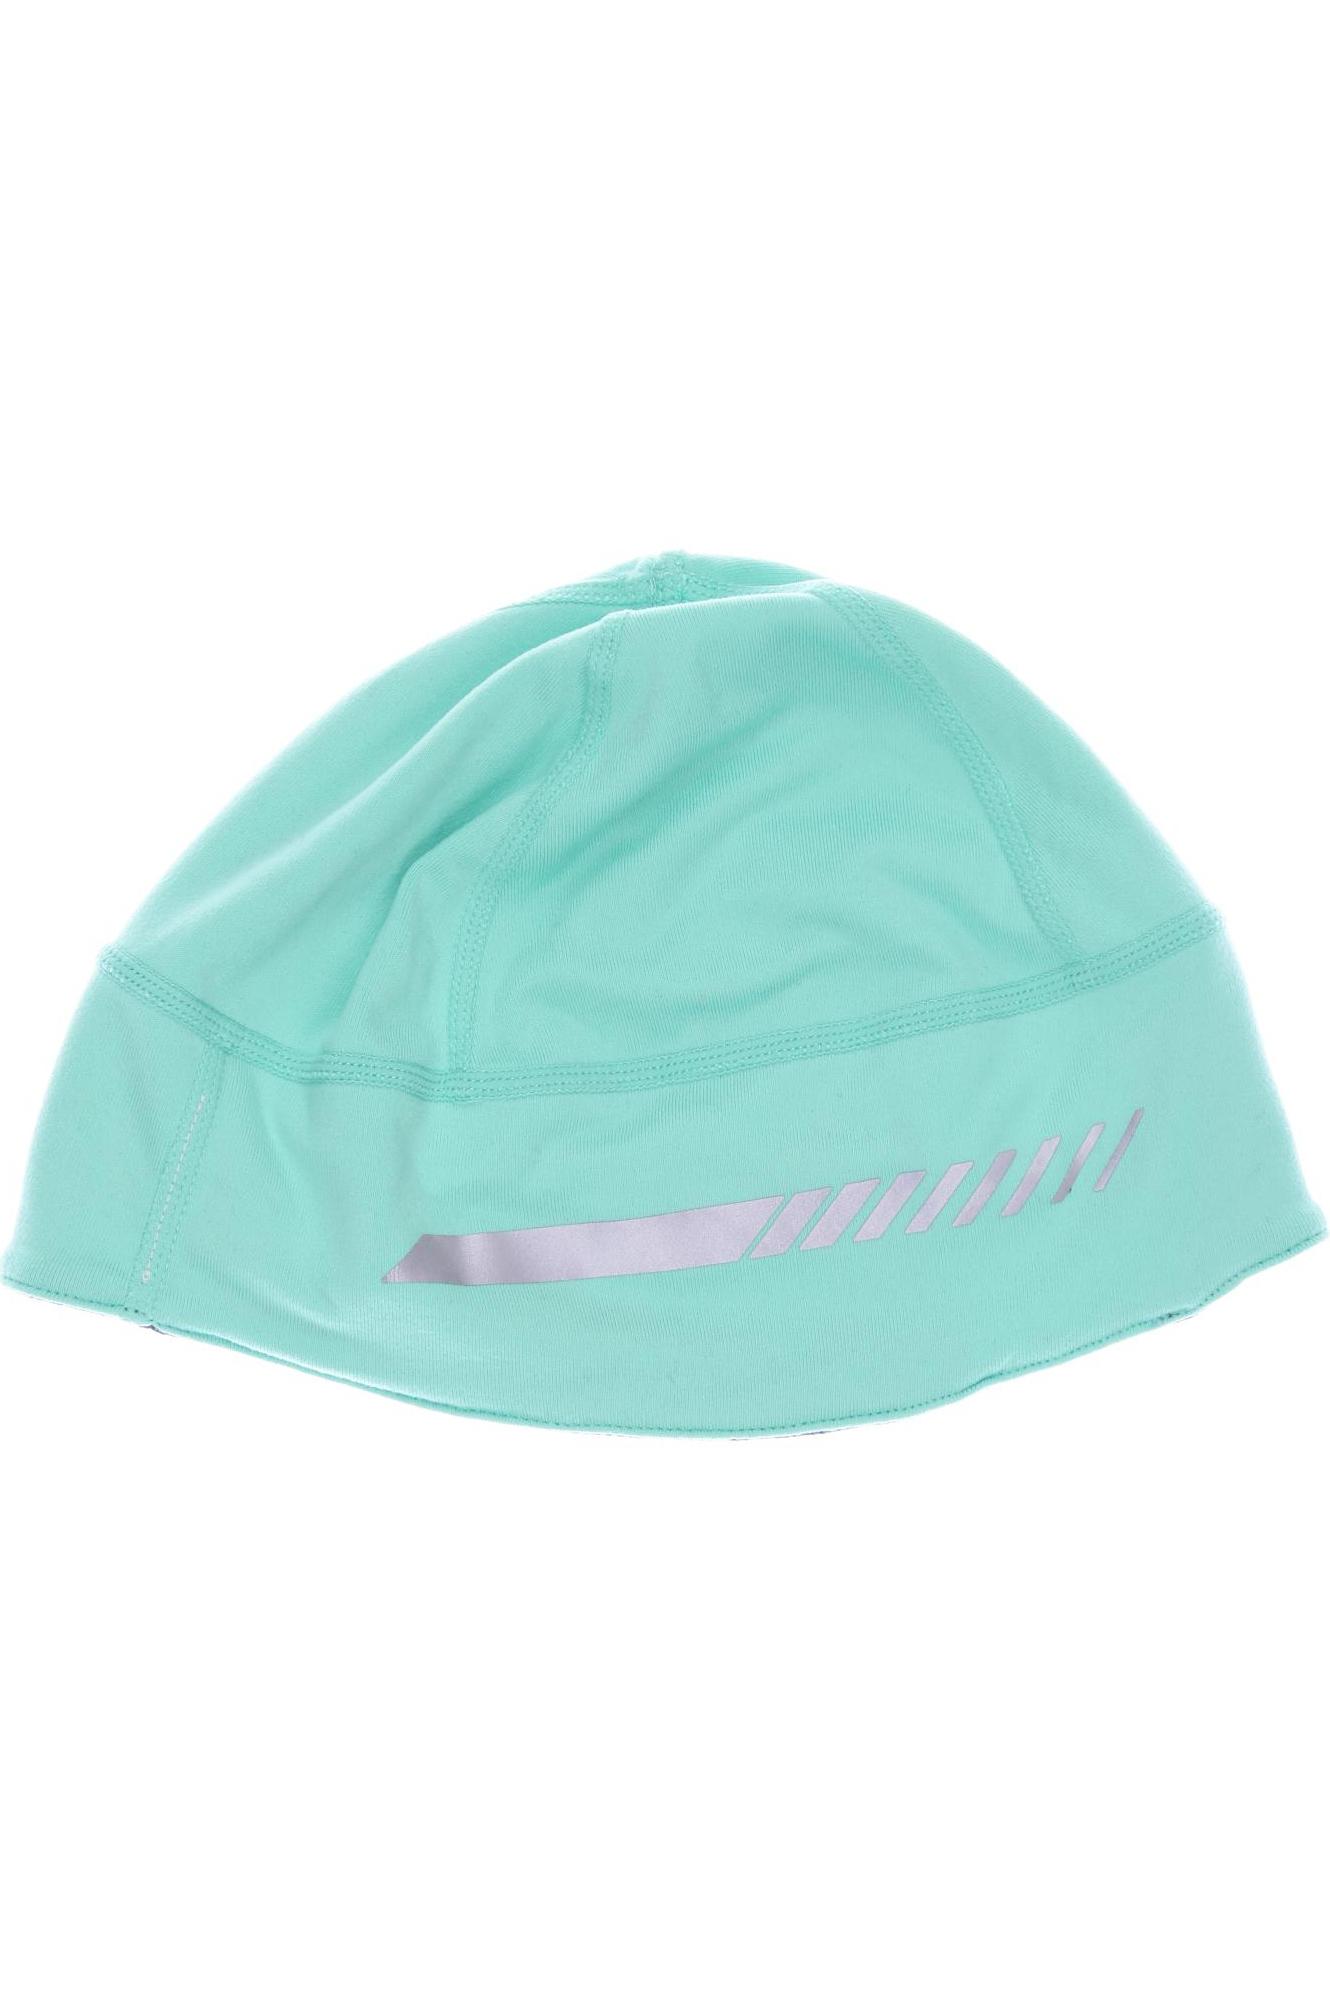 Asics Damen Hut/Mütze, hellgrün von ASICS